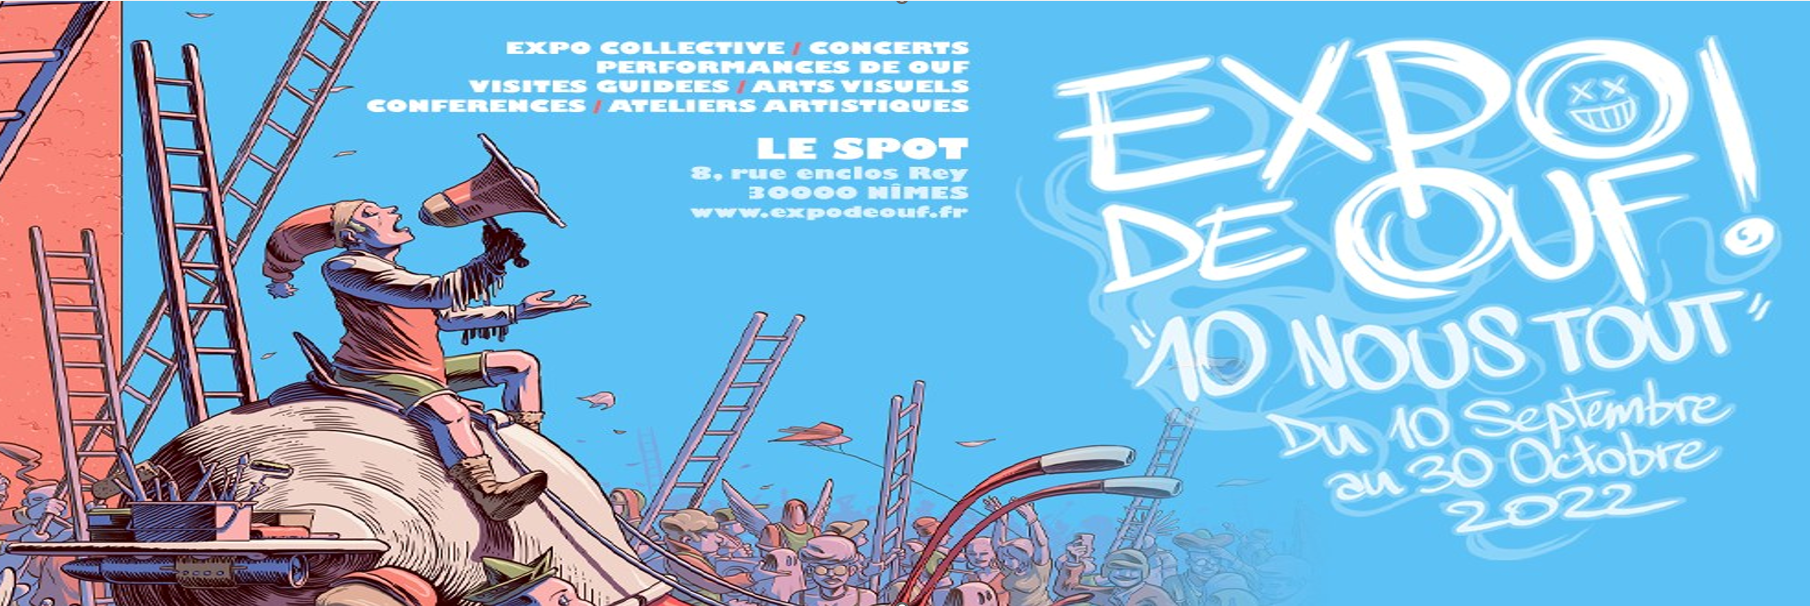 dixieme-edition-du-festival-expo-de-ouf